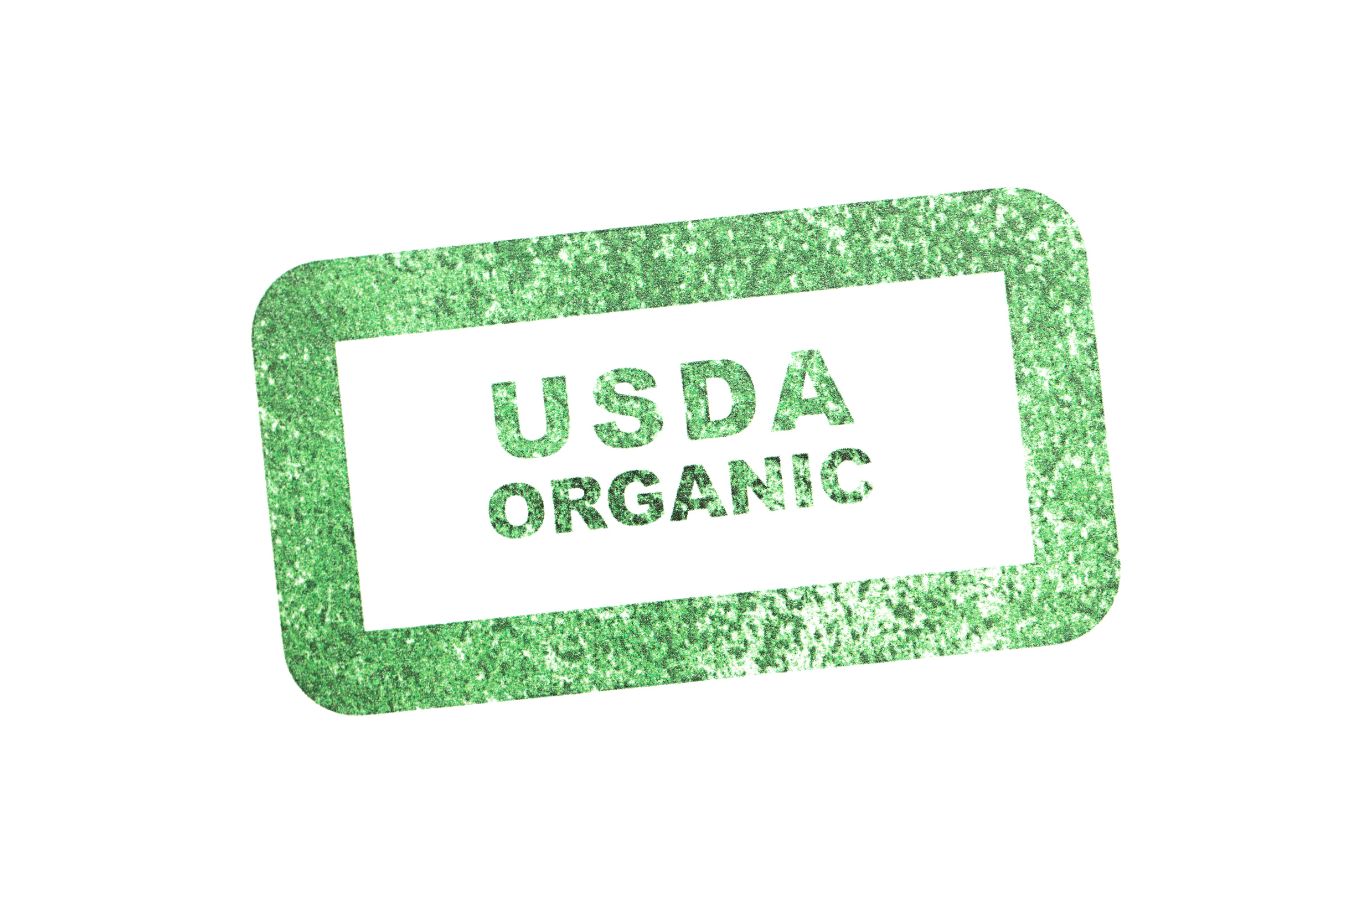 USDA Organic Certified Instant Coffee Supplier